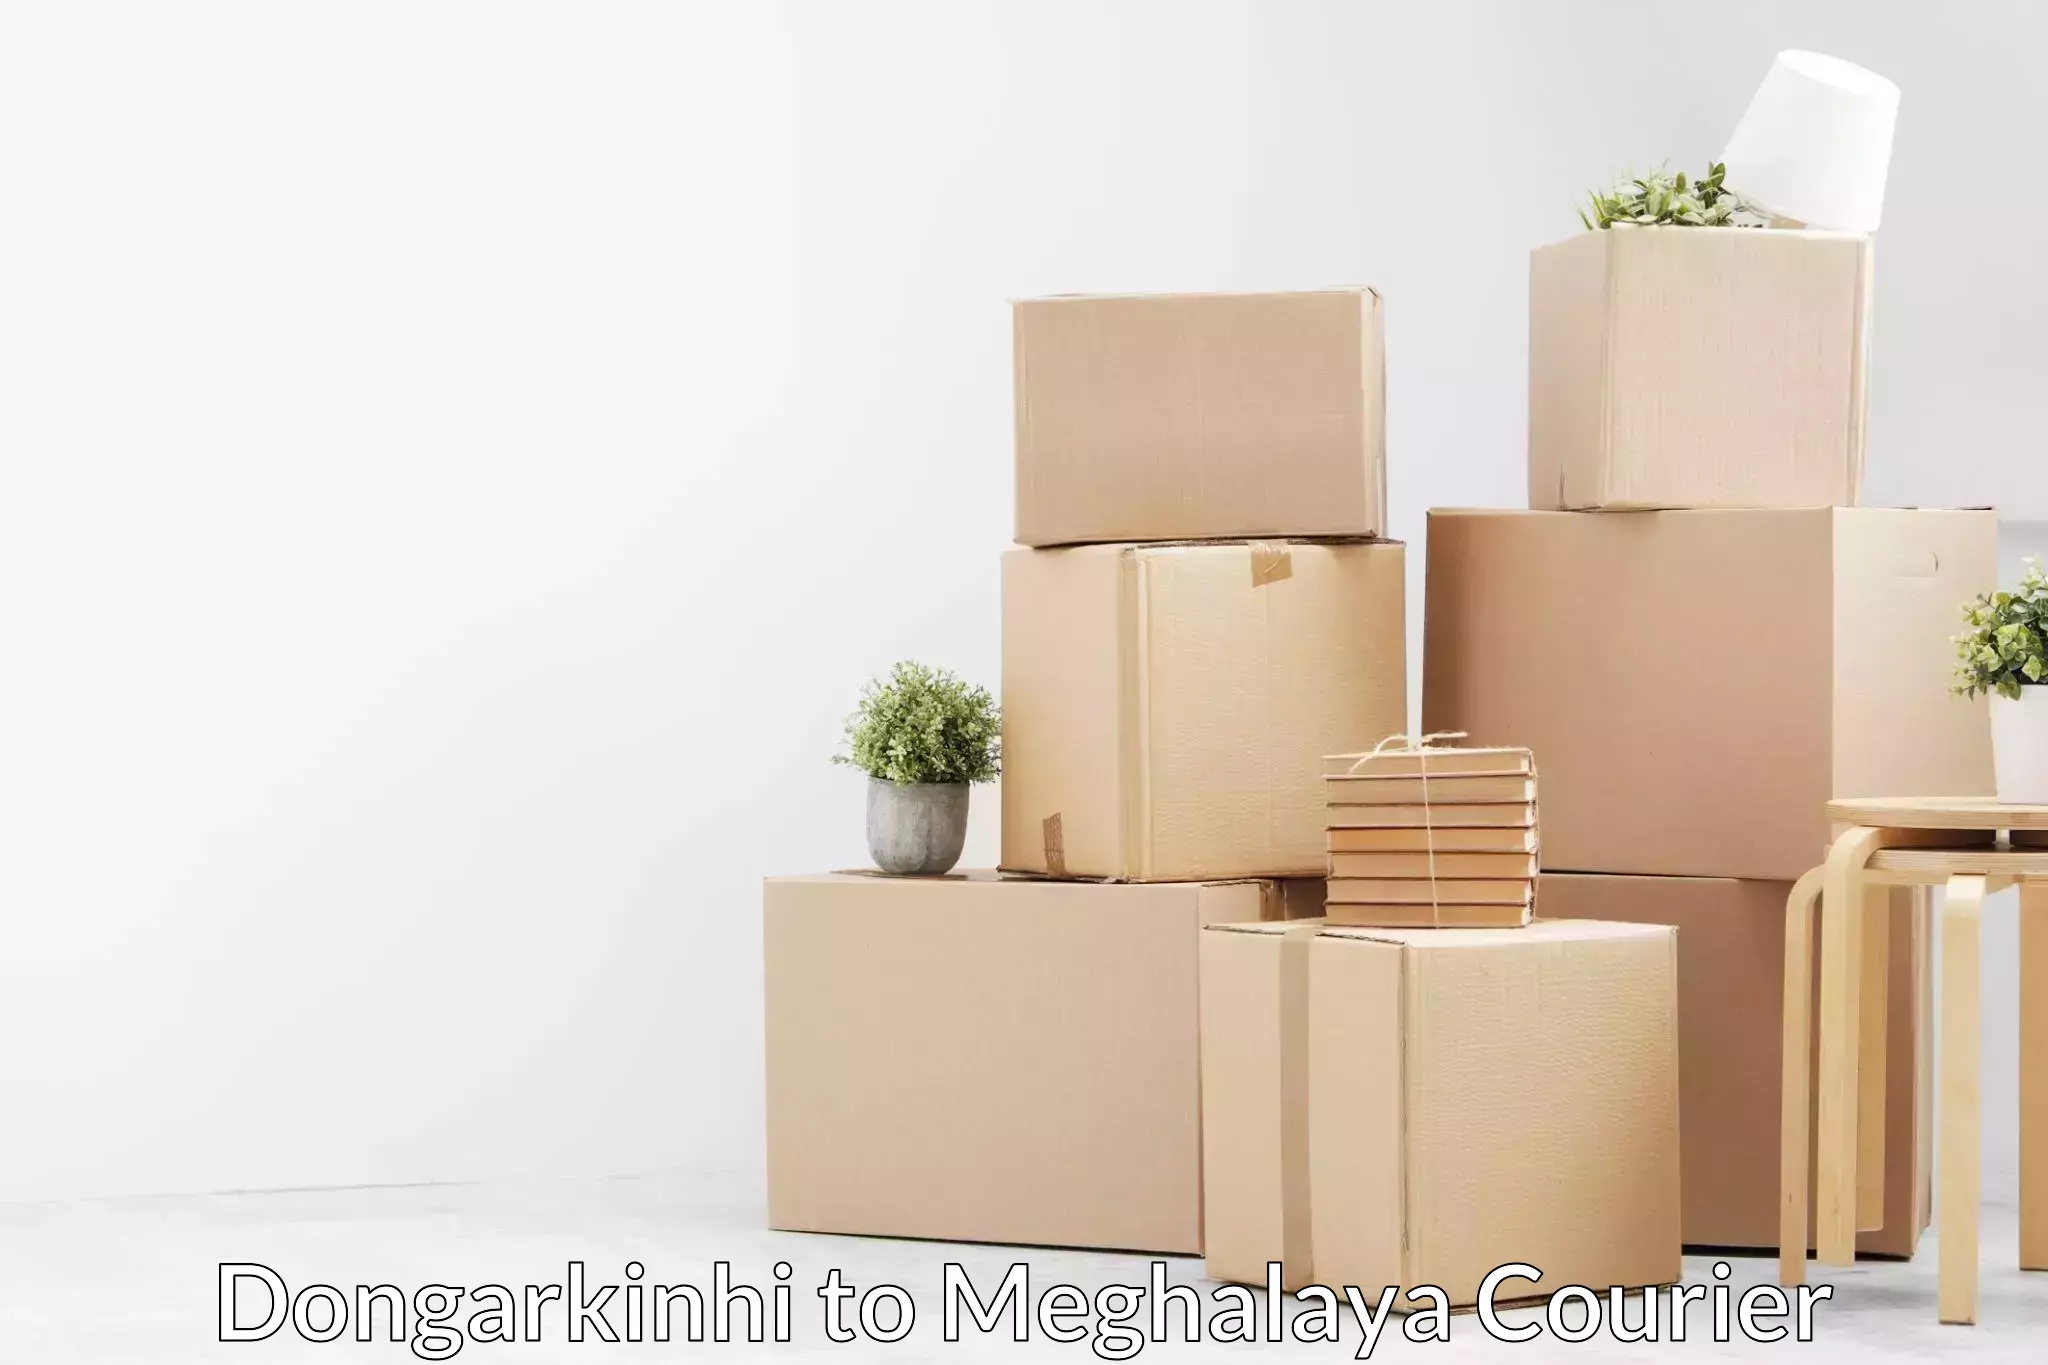 Specialized moving company Dongarkinhi to Meghalaya